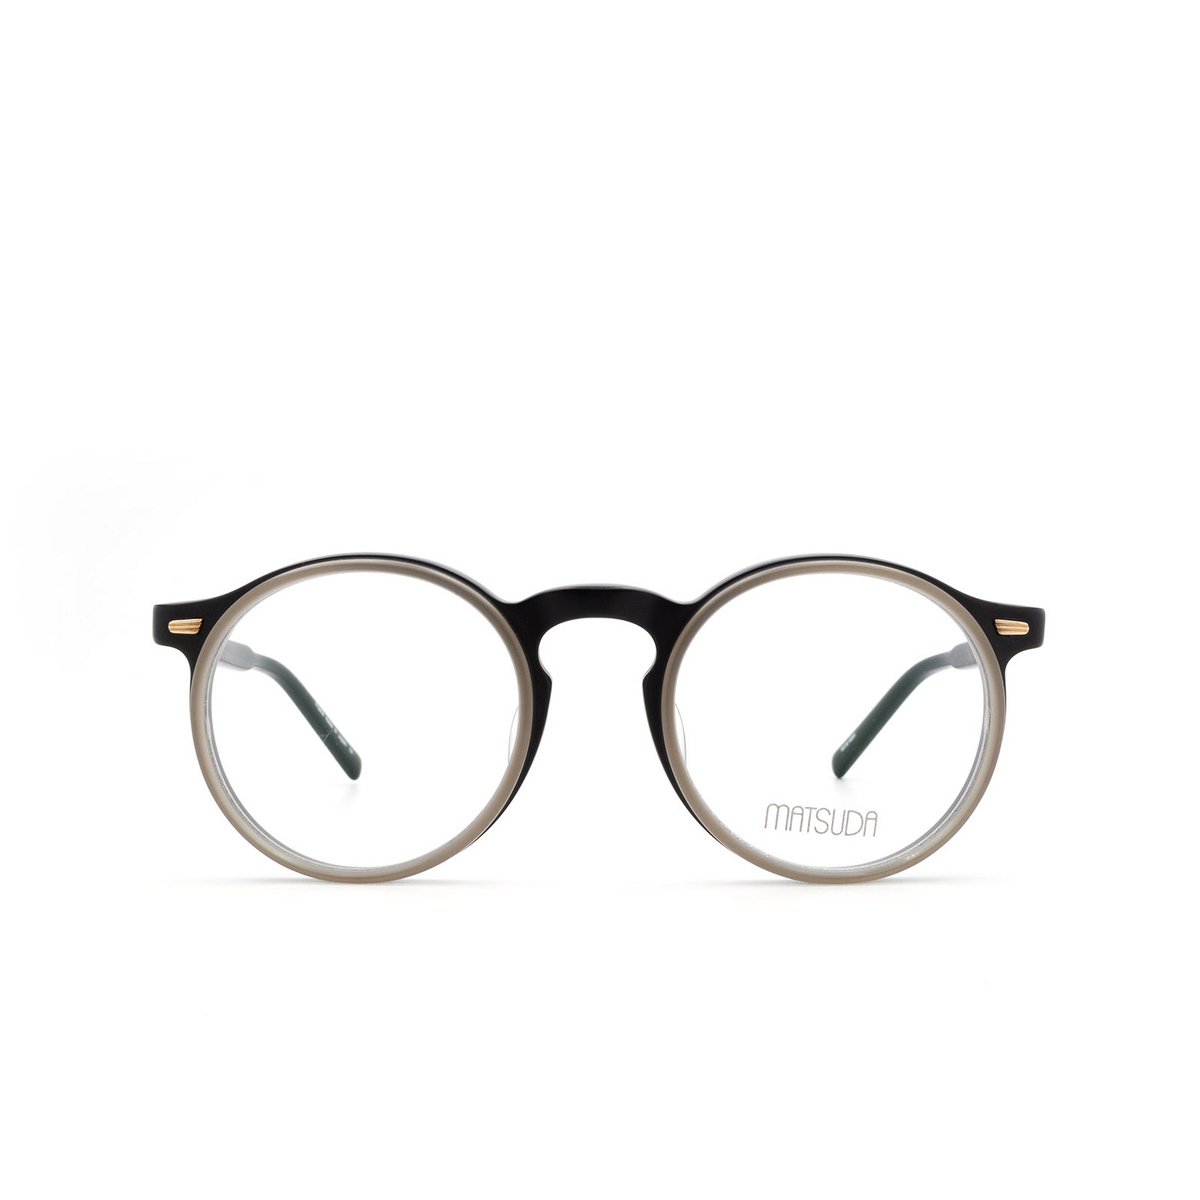 Matsuda® Round Eyeglasses: M1019 color Mcm-mbk - front view.